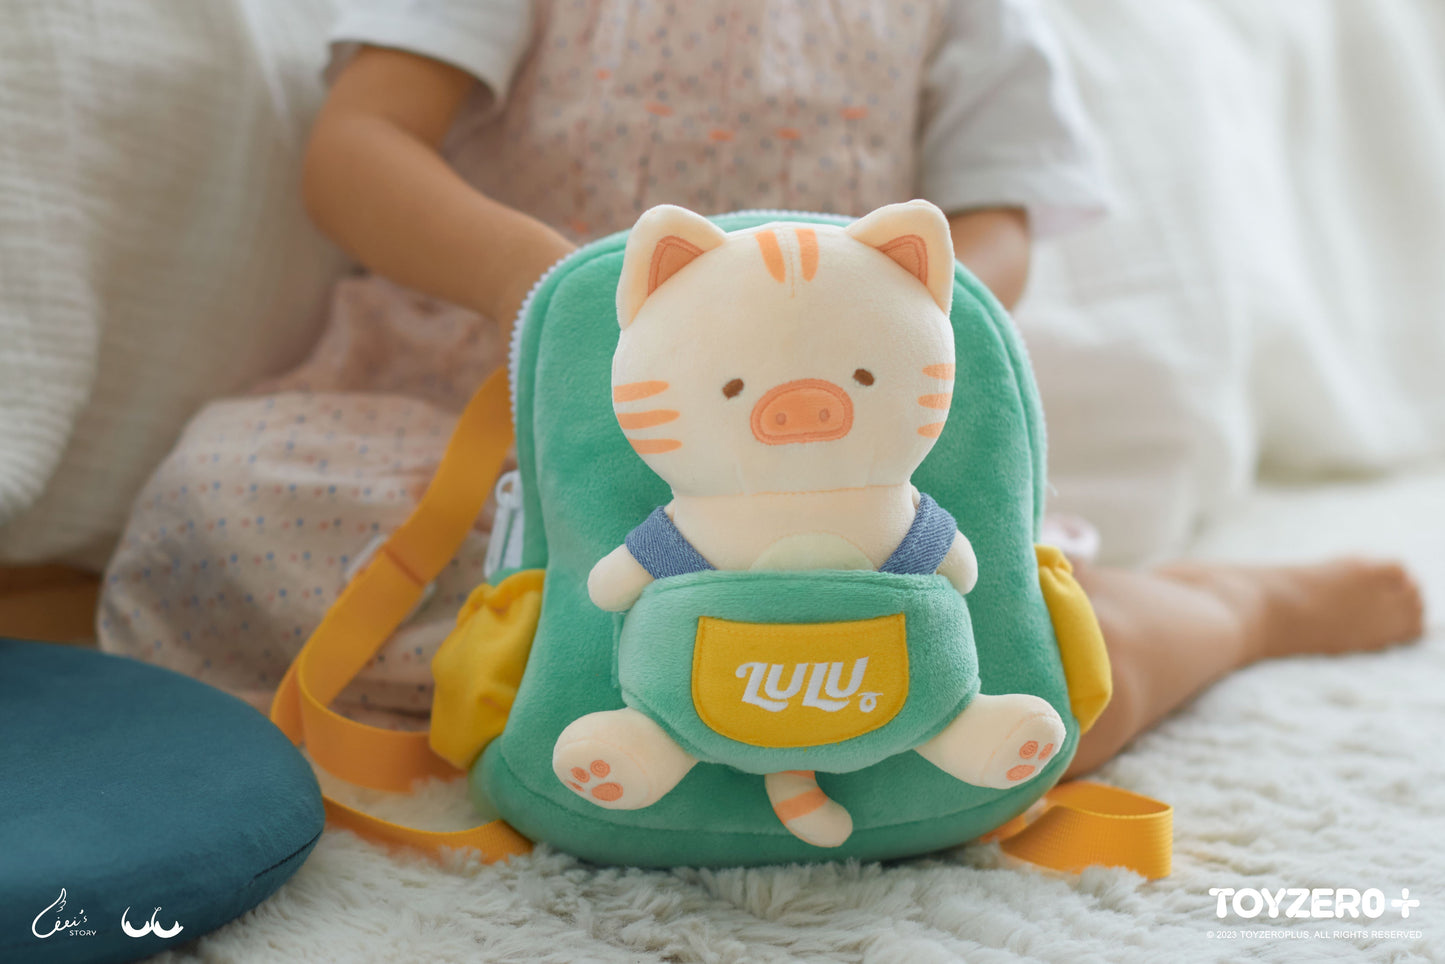 LuLu the Piggy find Your Way Travel with Kitty Backpack 罐頭豬LuLu 旅行系列 - 帶著豬咪看世界 背包